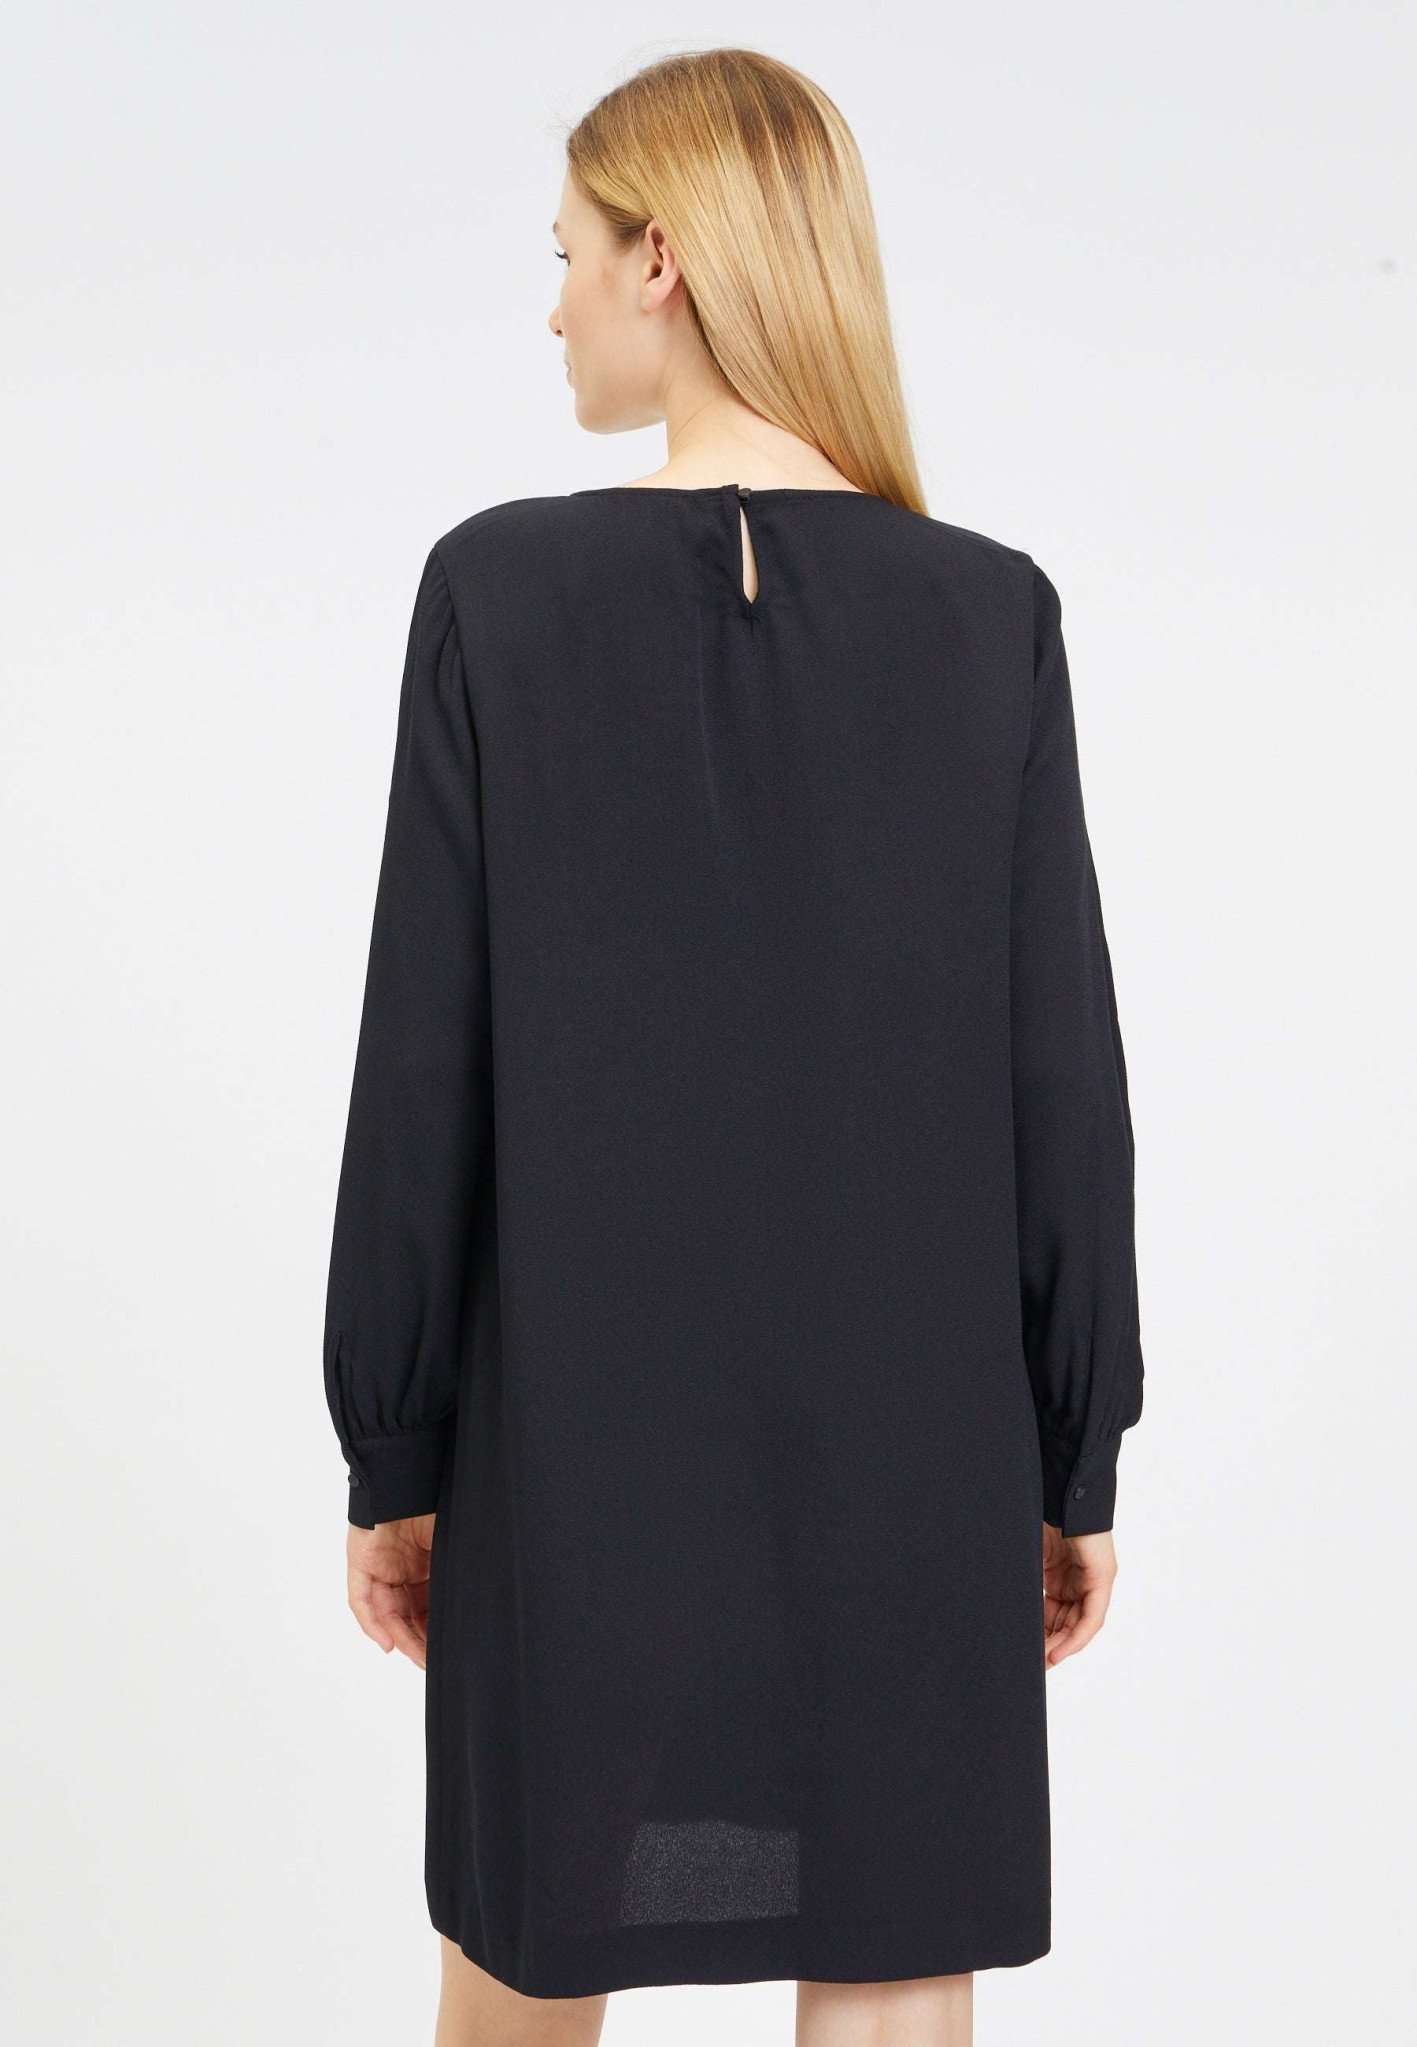 Bedenica A- Line Dress in Black Beauty Kleider Tamaris   